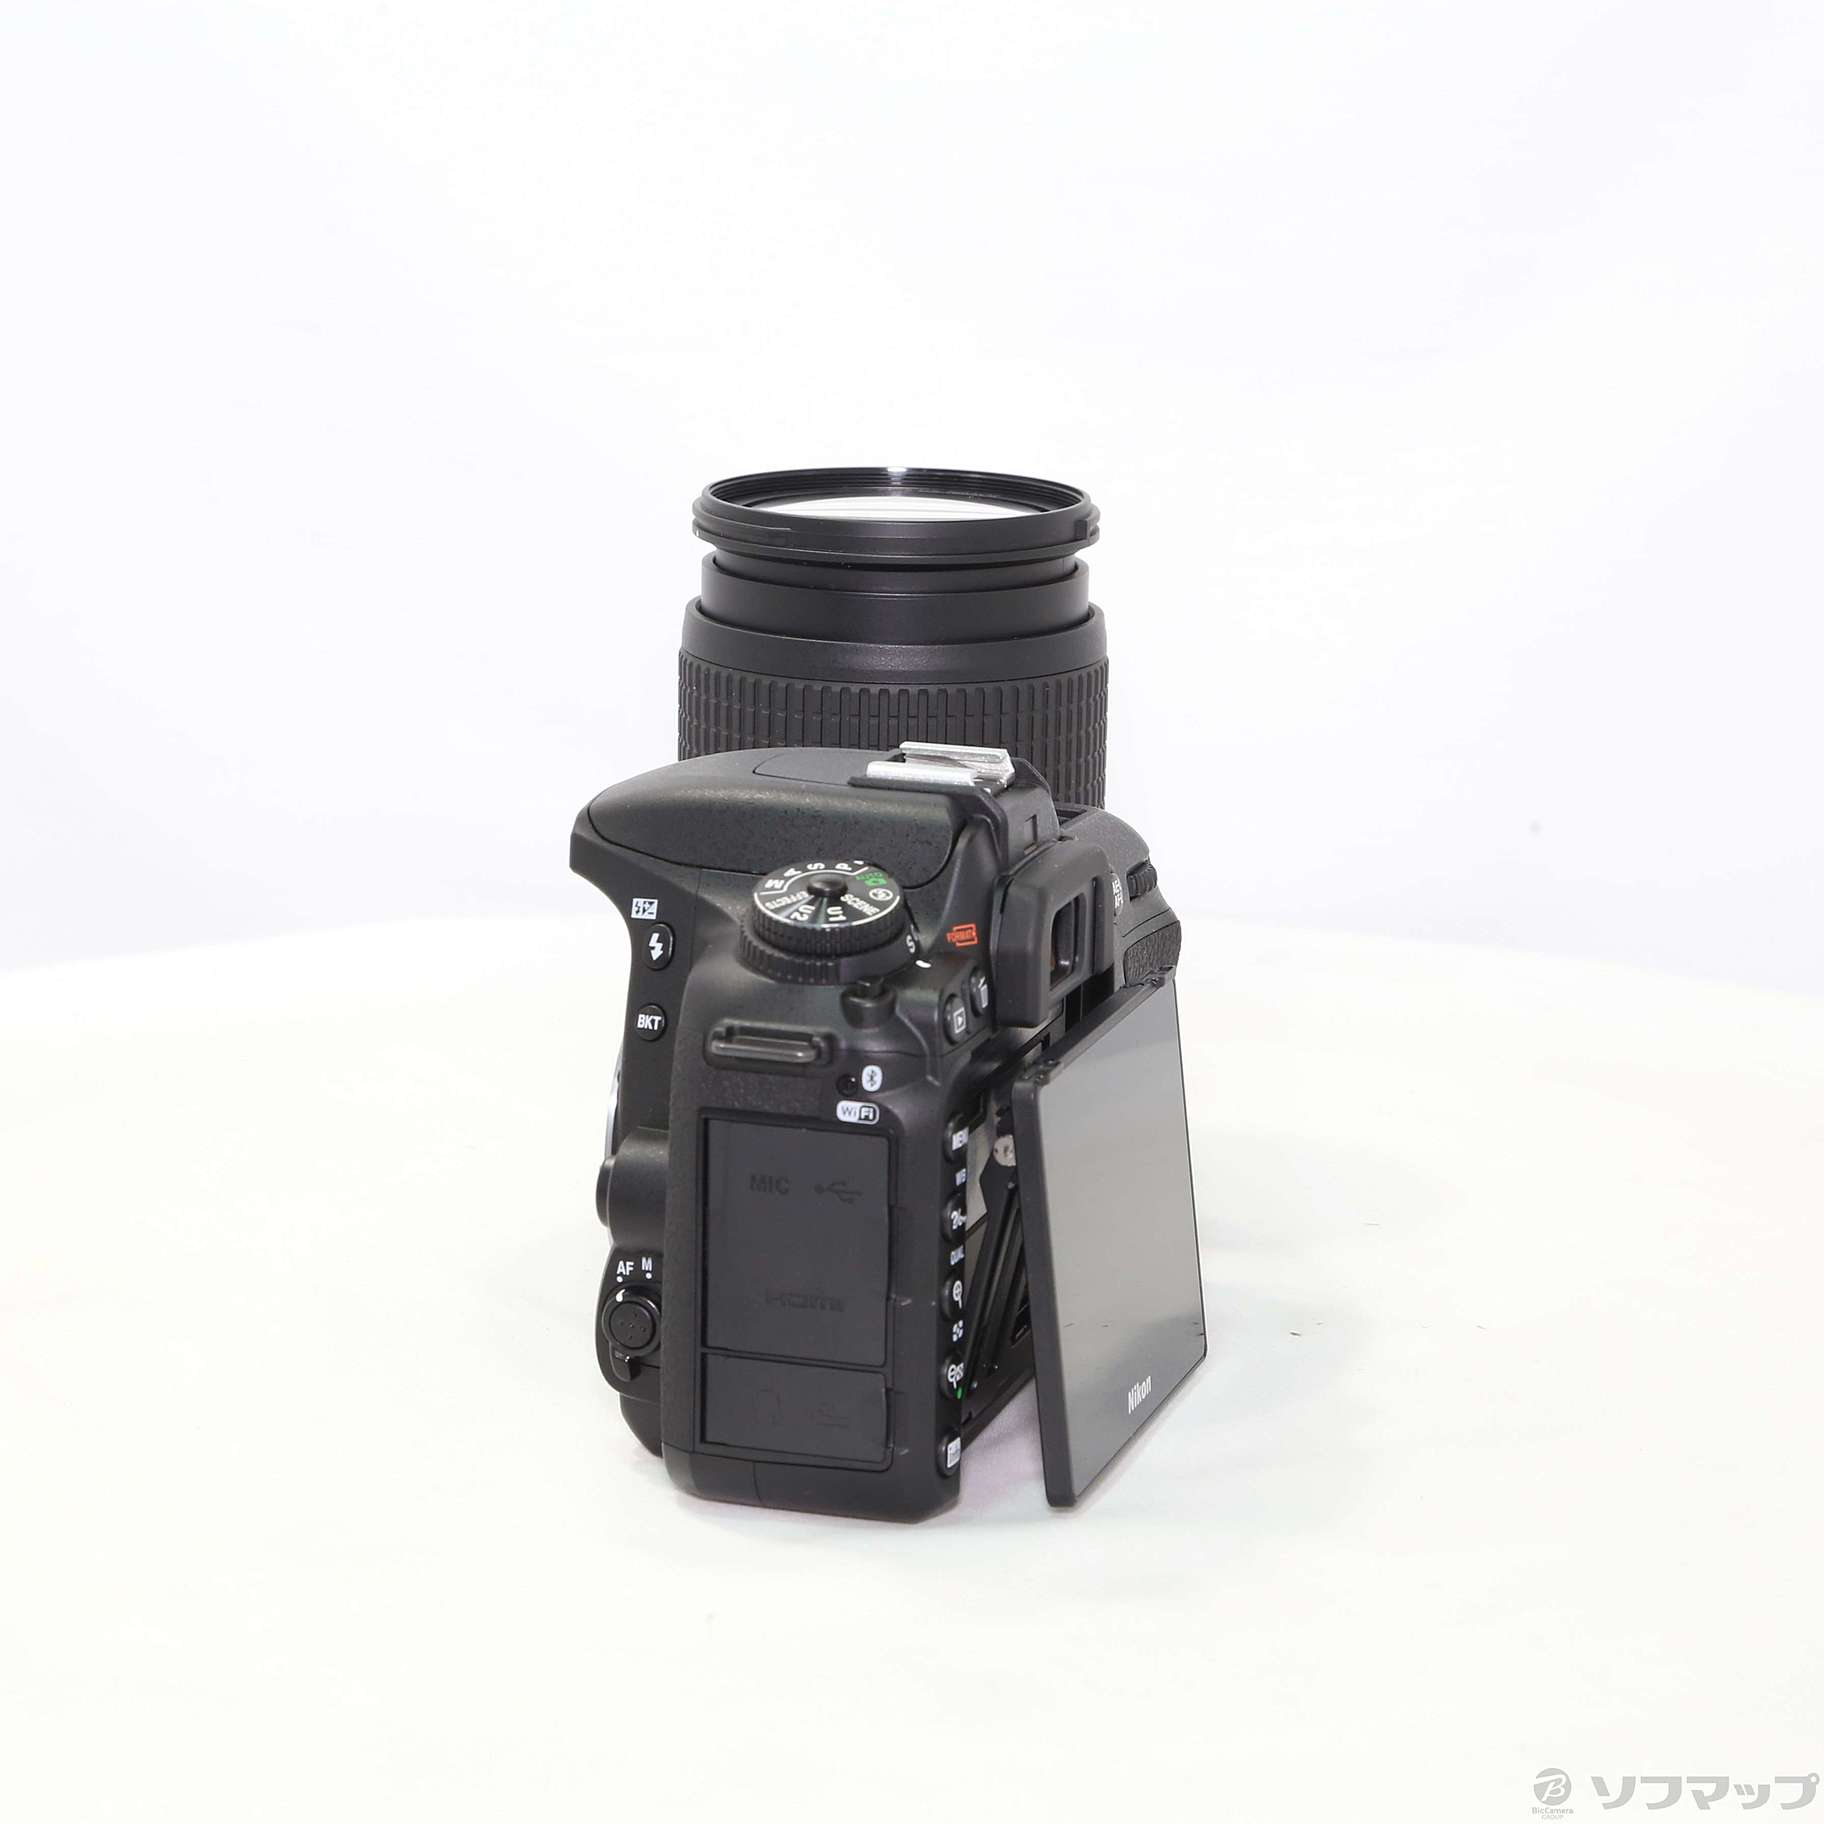 Nikon デジタル一眼レフカメラ D7500 18-140VR レンズキット D7500LK18-140 - 3